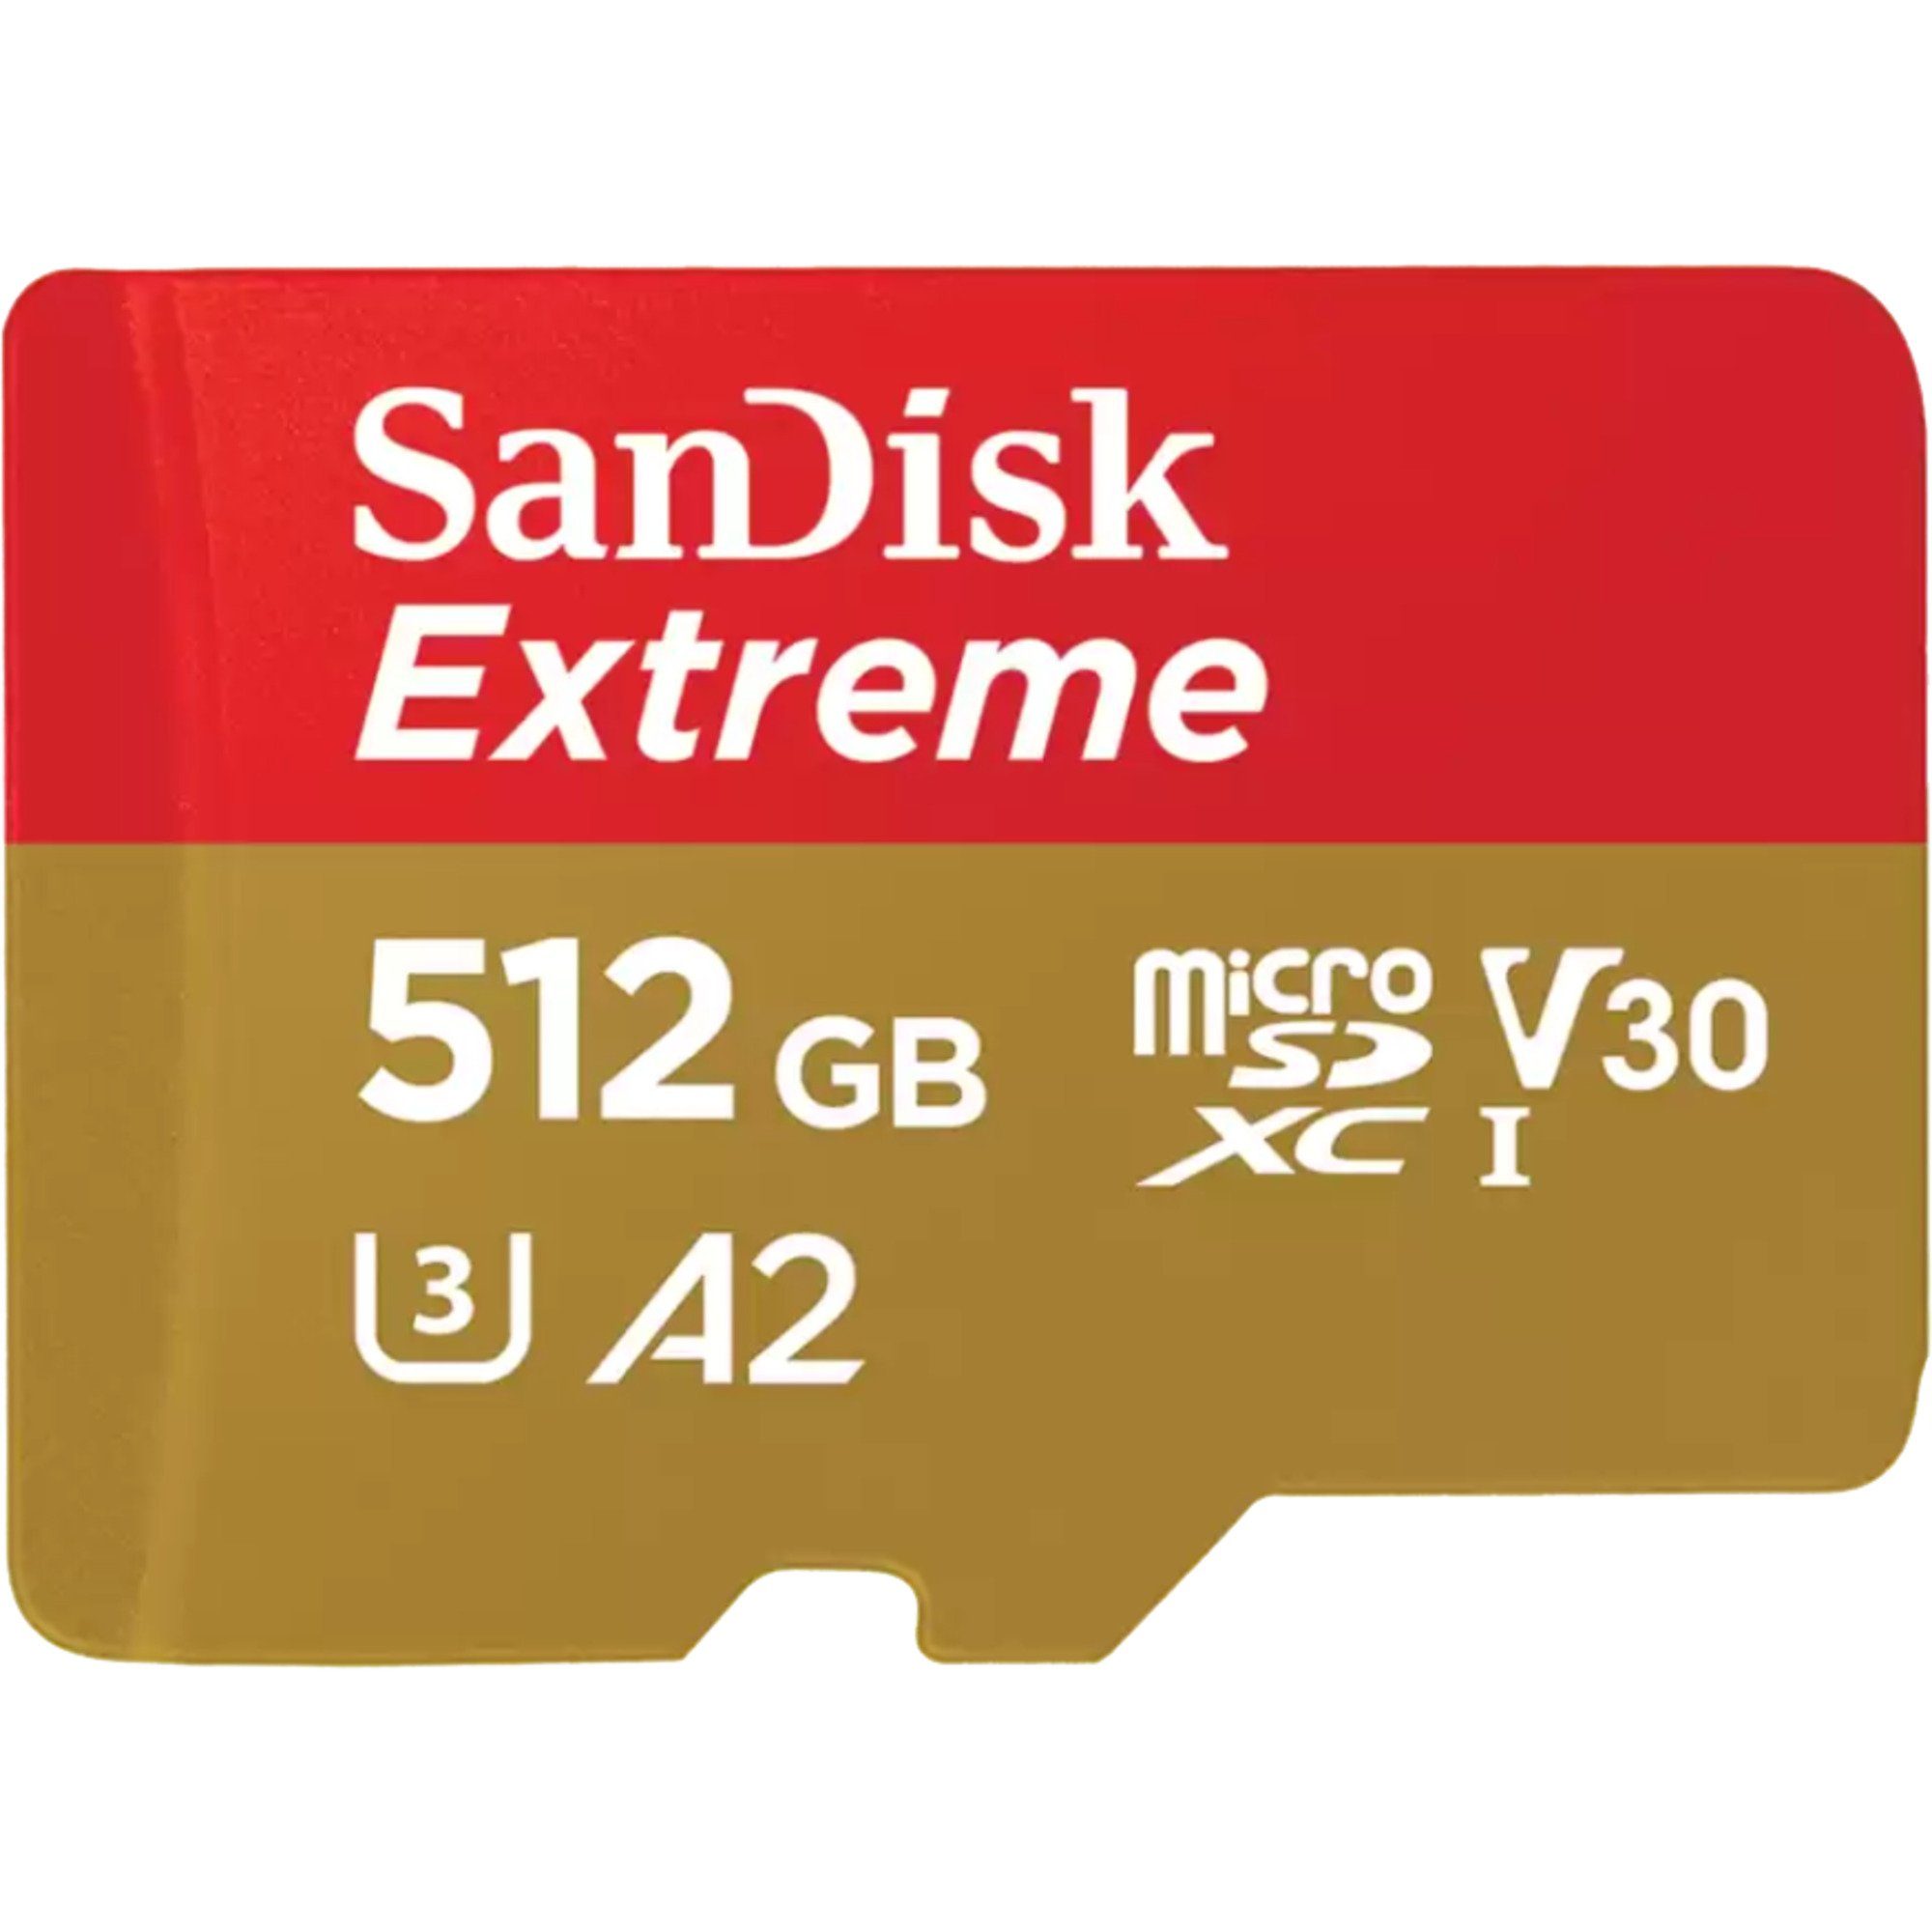 Sandisk Extreme 512 GB microSDXC Speicherkarte (512 GB GB)